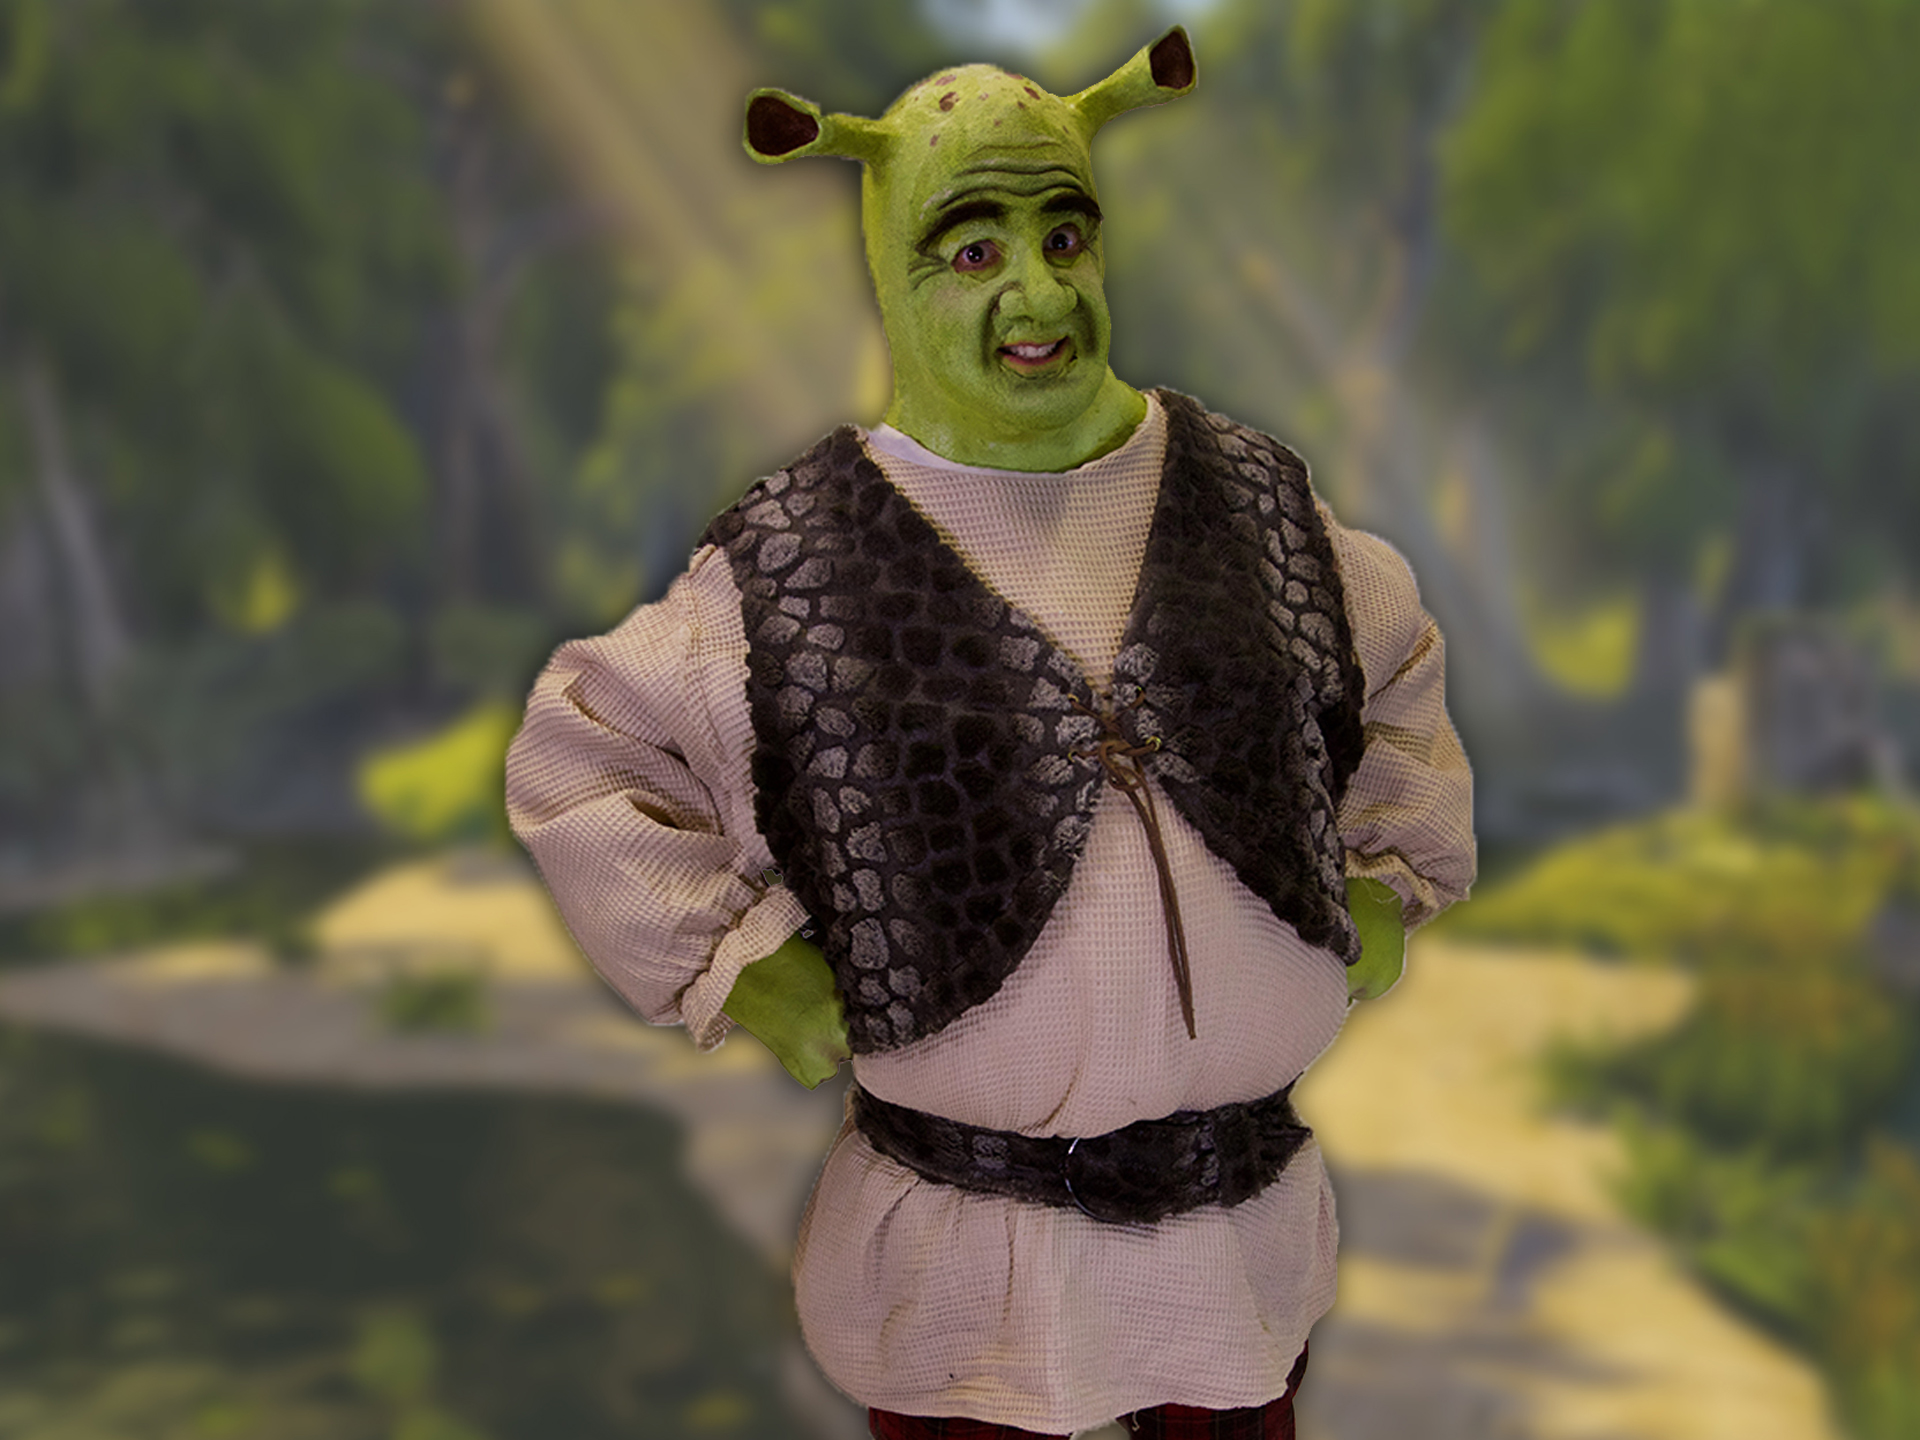 Shrek Solo